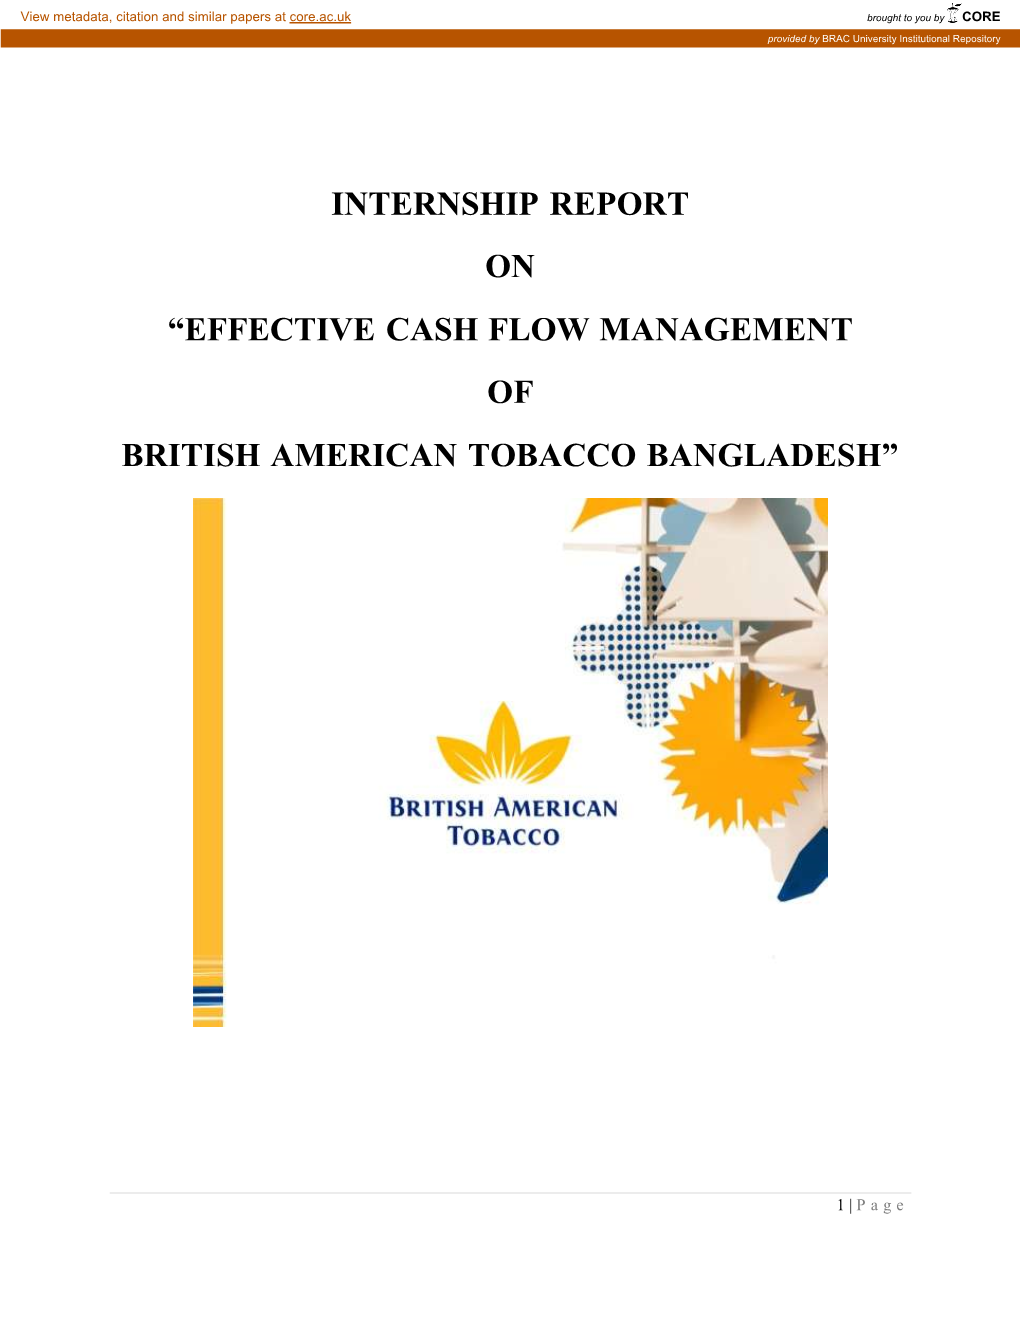 Effective Cash Flow Management of British American Tobacco Bangladesh”